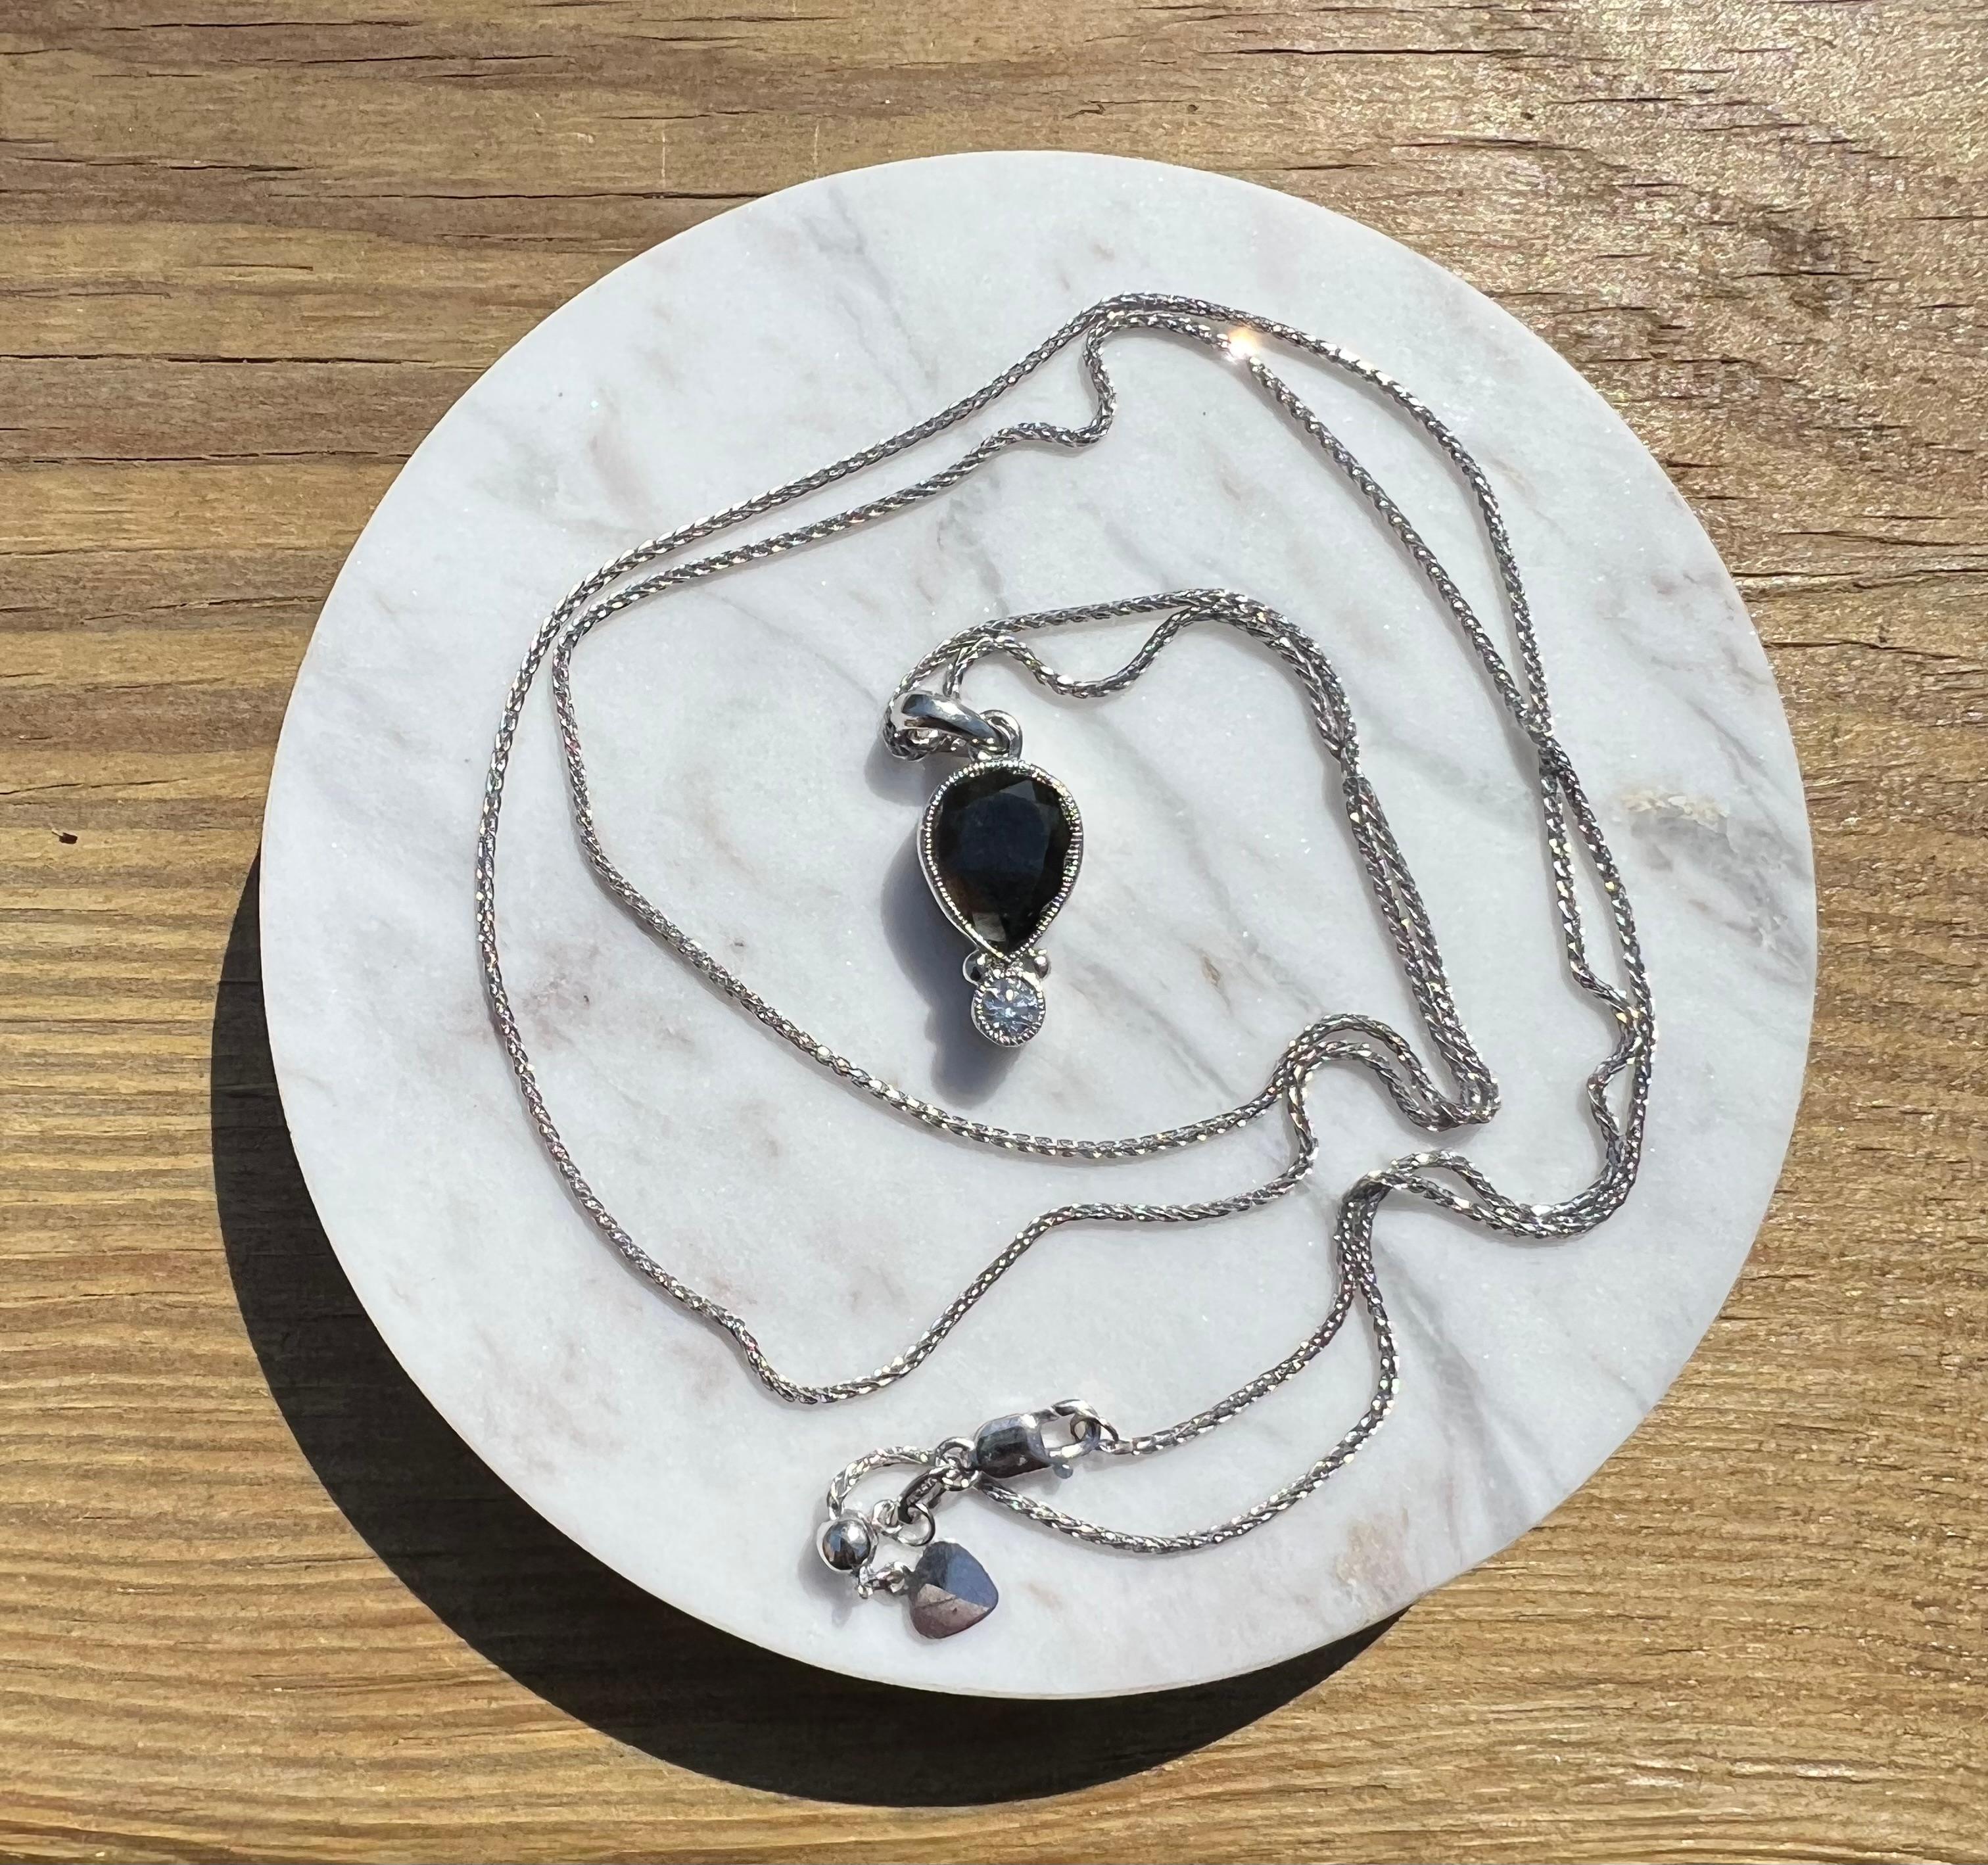 Women's or Men's Custom Designed 4.14 Carat Pear Shaped Black Diamond Pendant